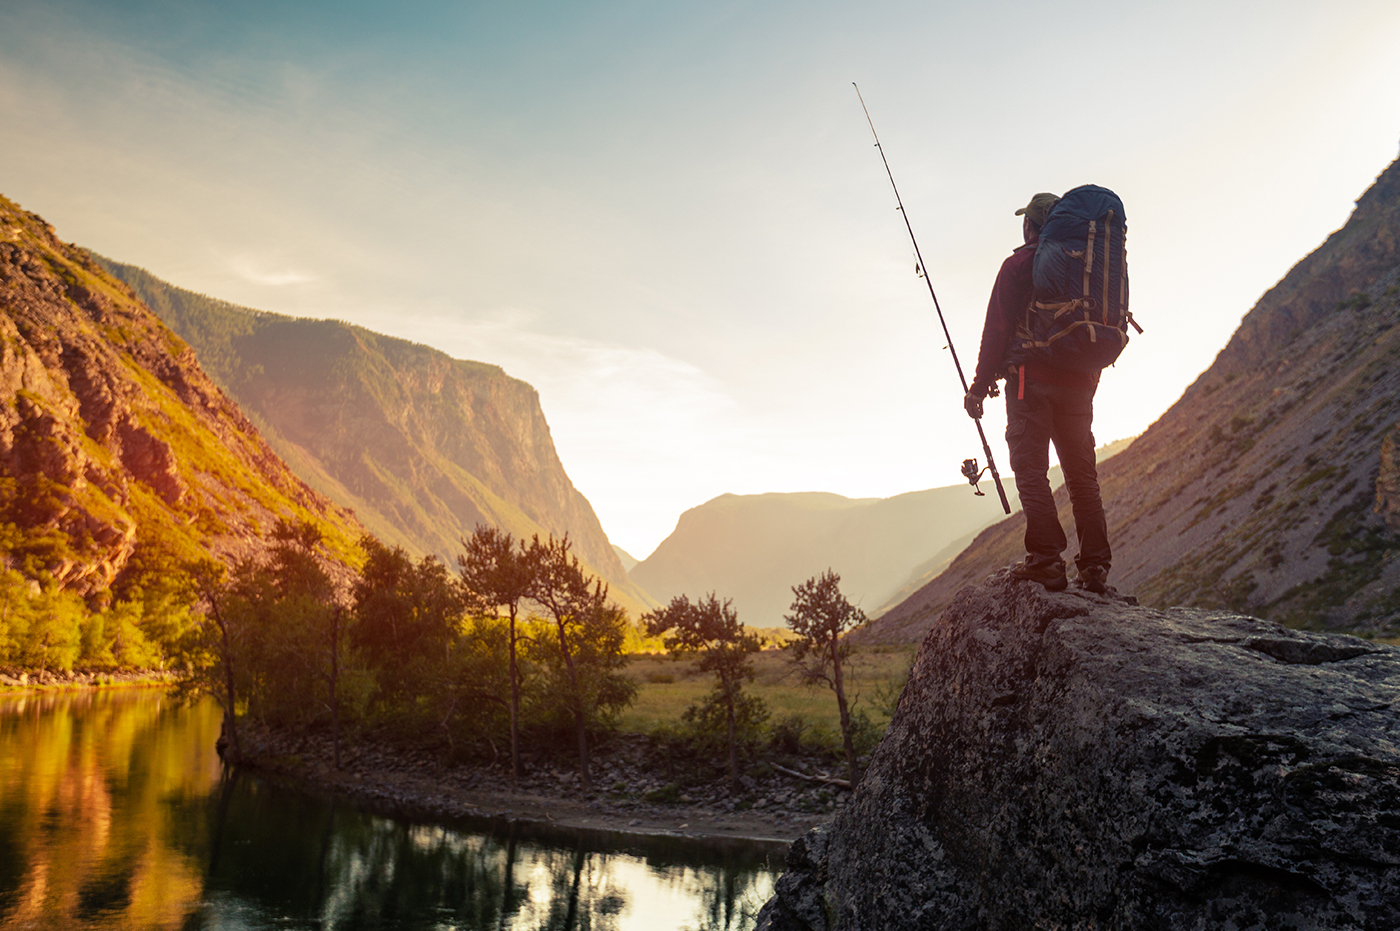 A man fishing in a mountainous area.